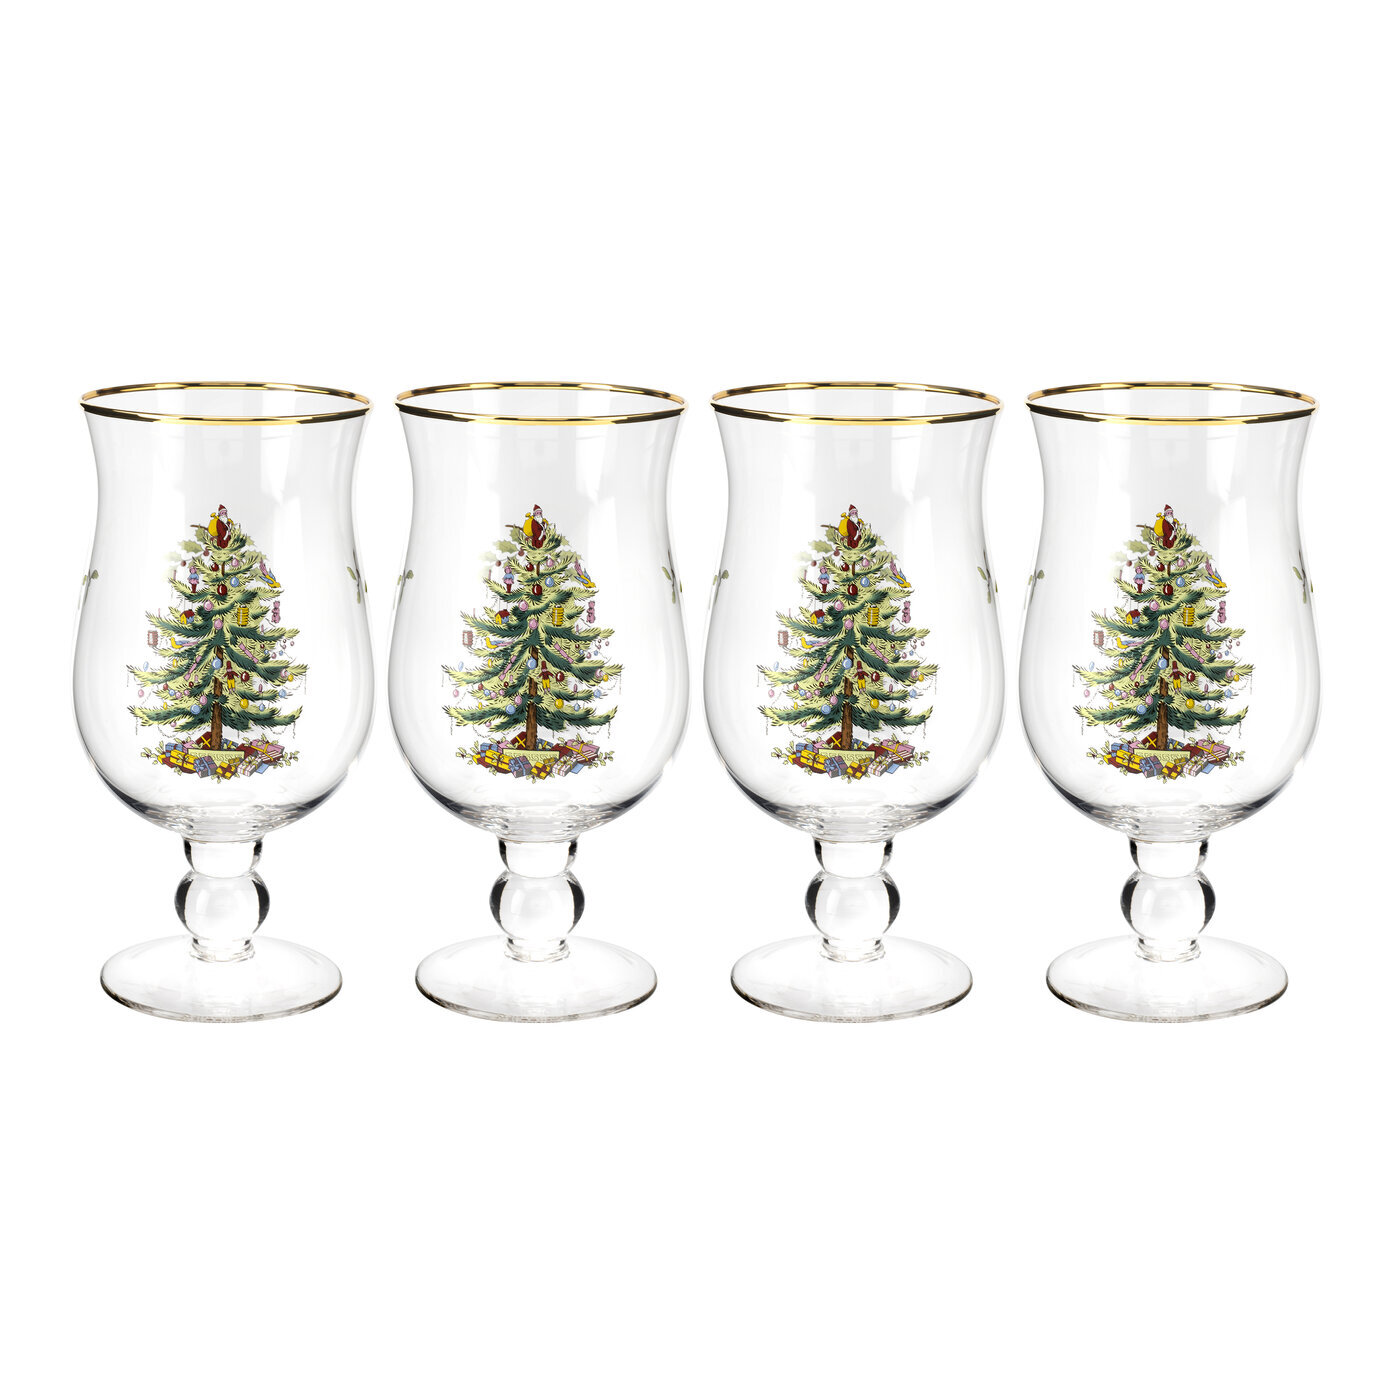 Spode Christmas Tree Goblets Set of 4 Christmas Festive Glassware 